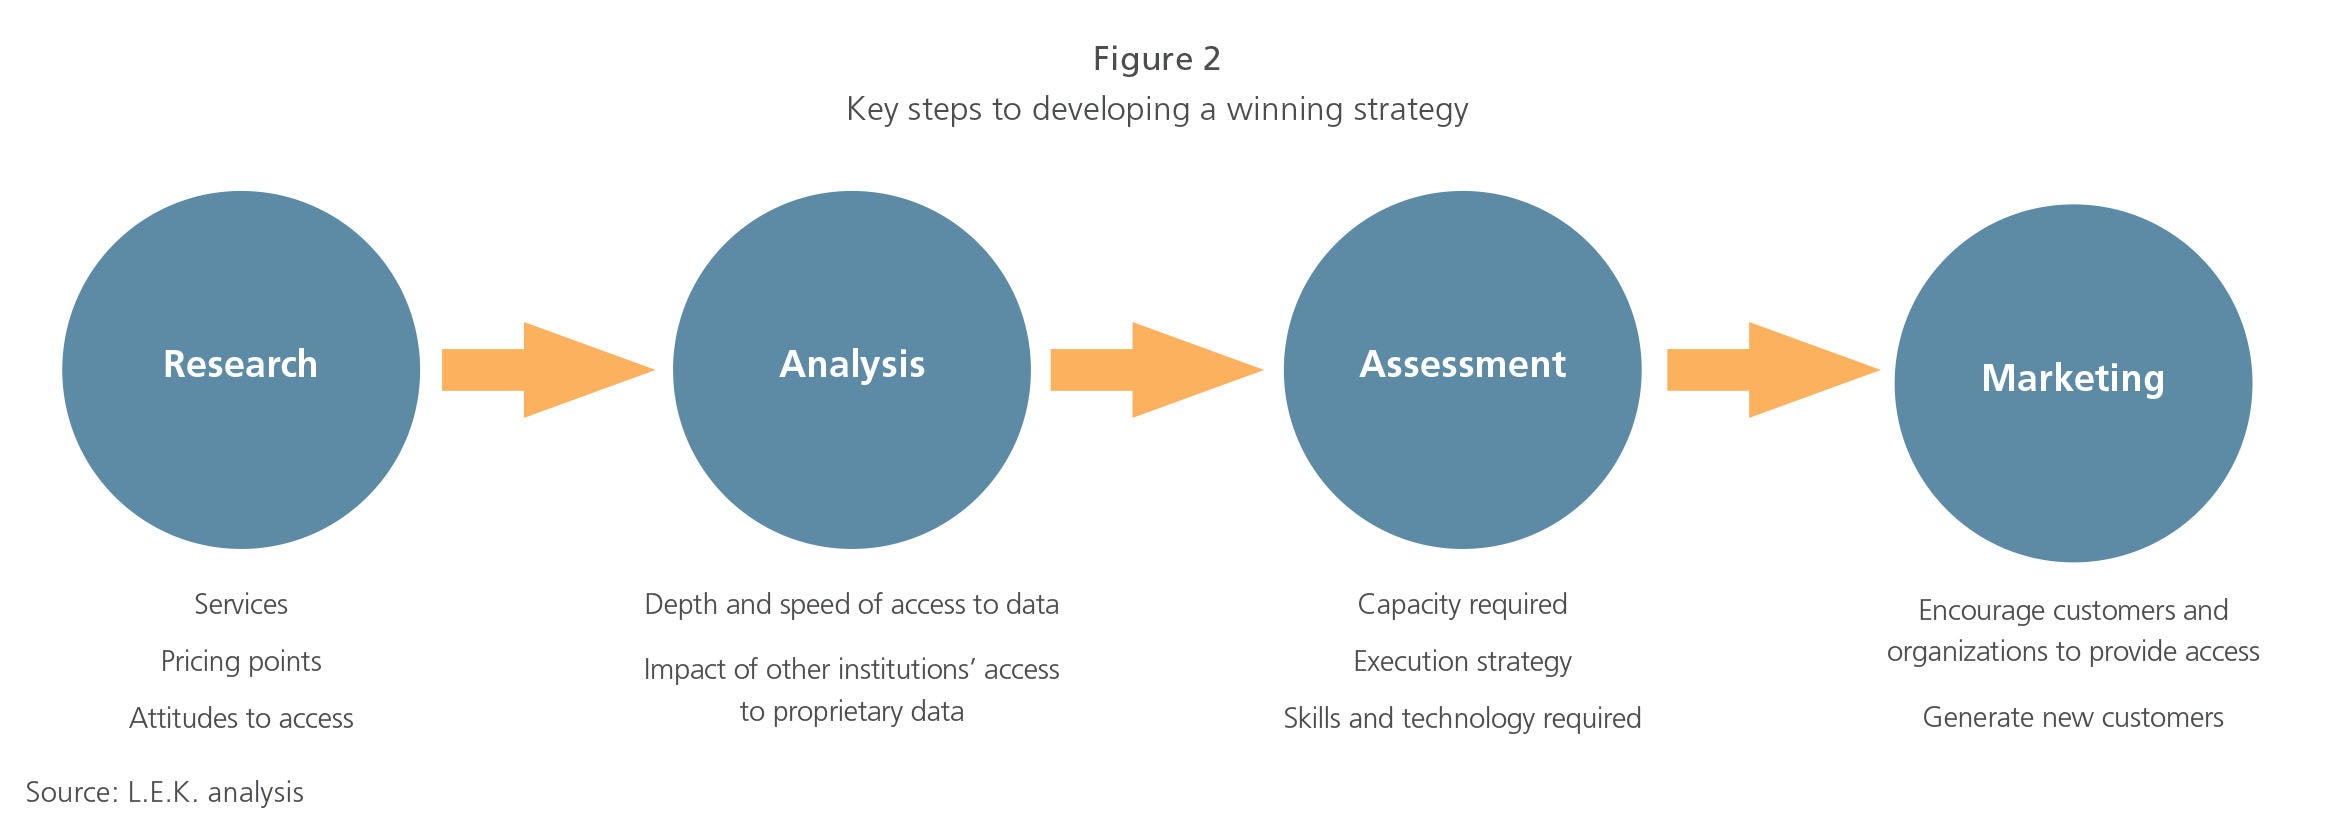 Key steps to developing a winning strategy